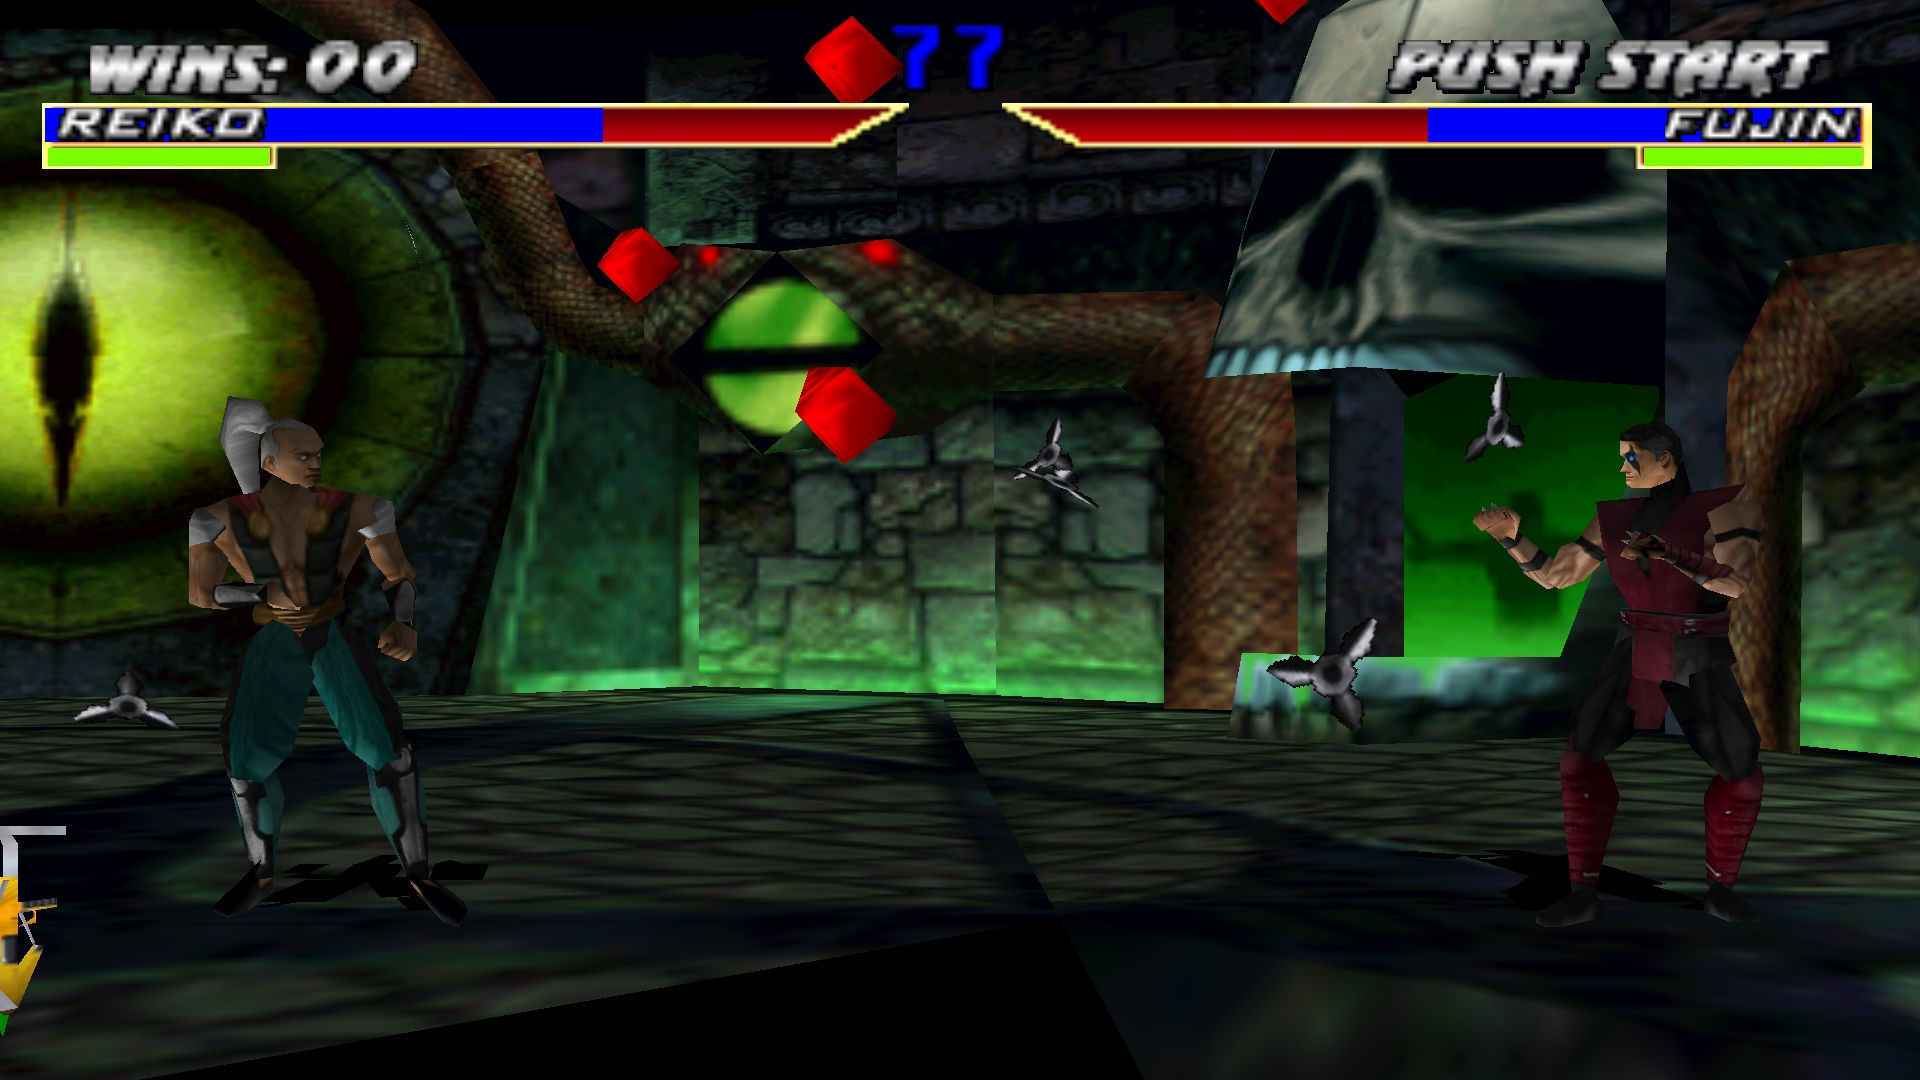 Mortal Kombat 4, The 1997 Klassic, Is Now On GOG - GameSpot